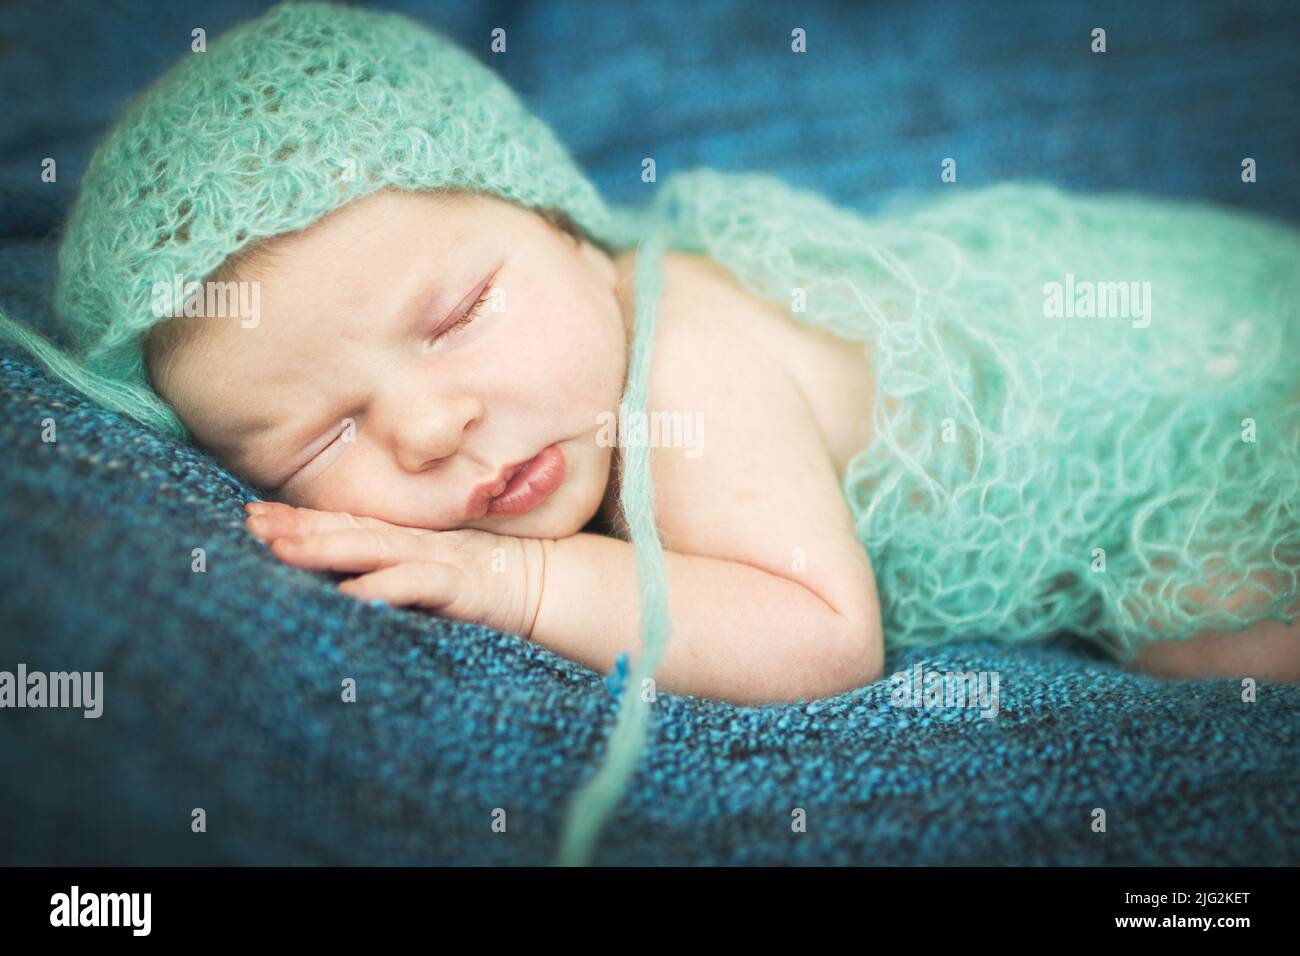 newborn baby sleeping sweetly on a blue background Stock Photo